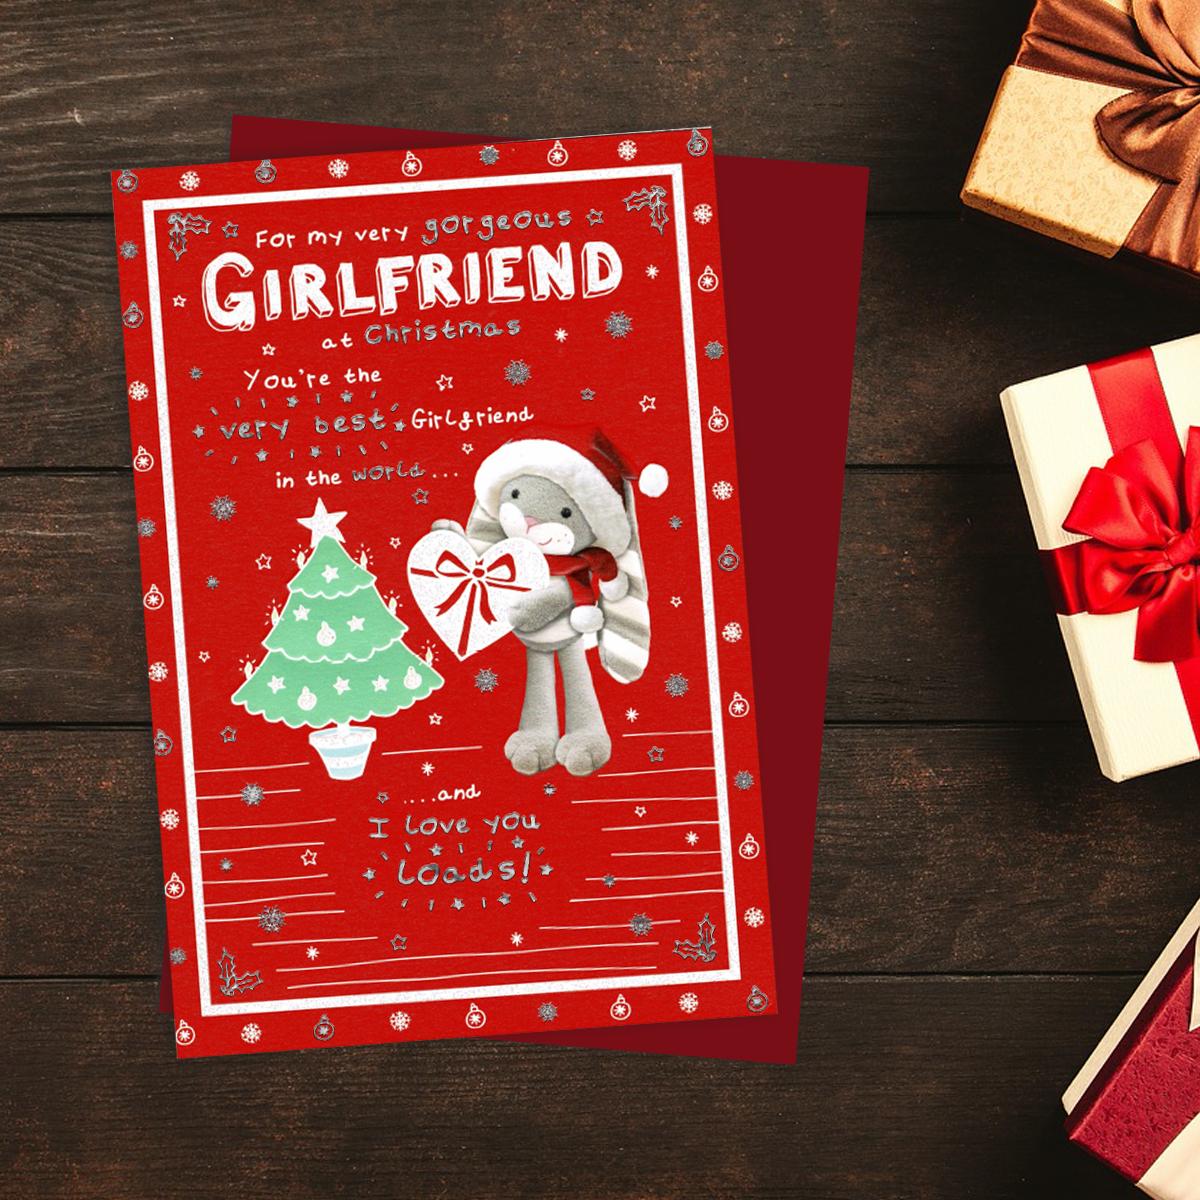 Girlfriend Christmas Card Alongside Its Red Envelope